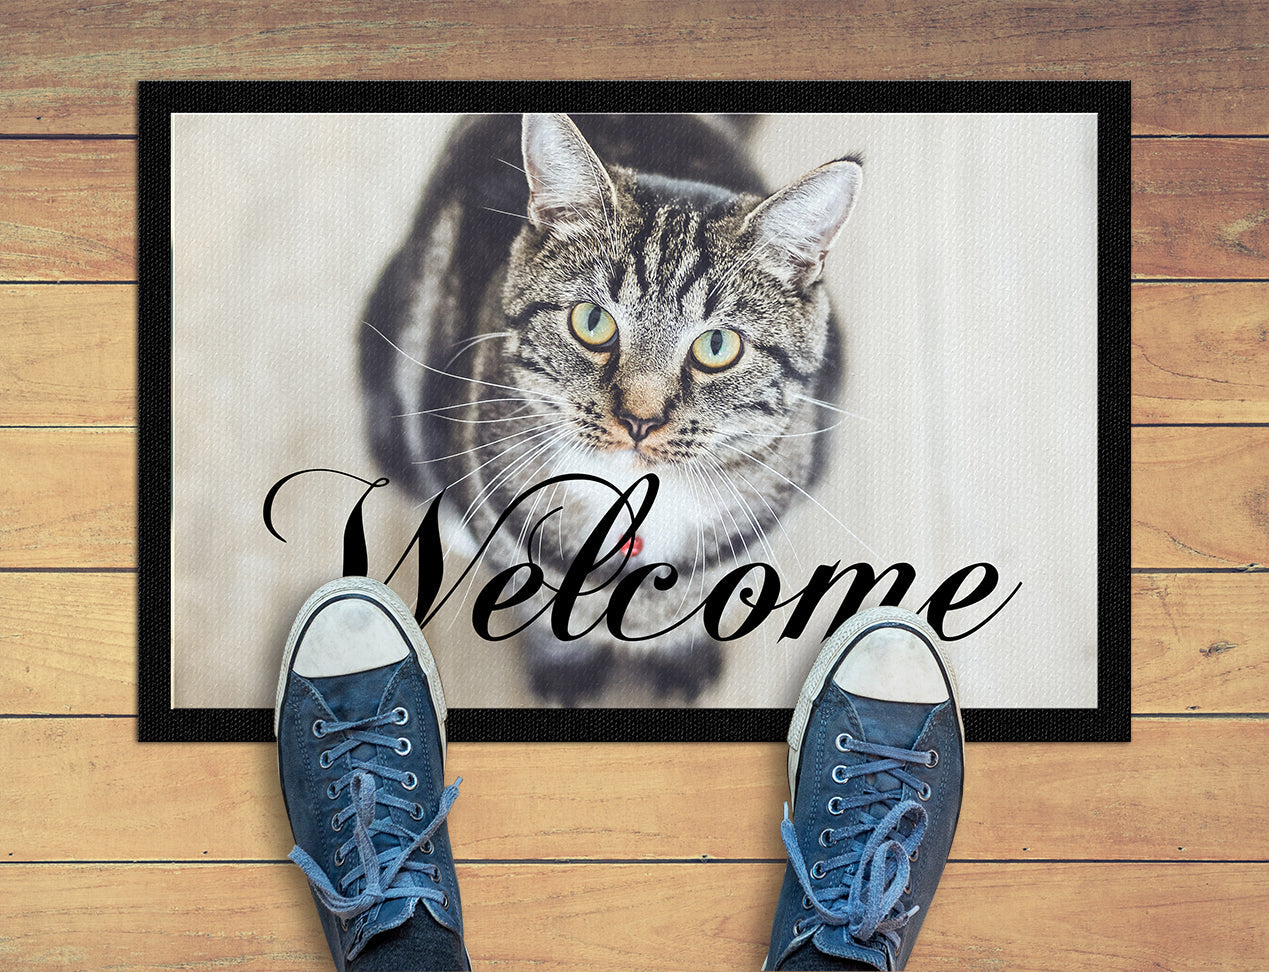 Custom Door Mat with Welcome message and Cat image